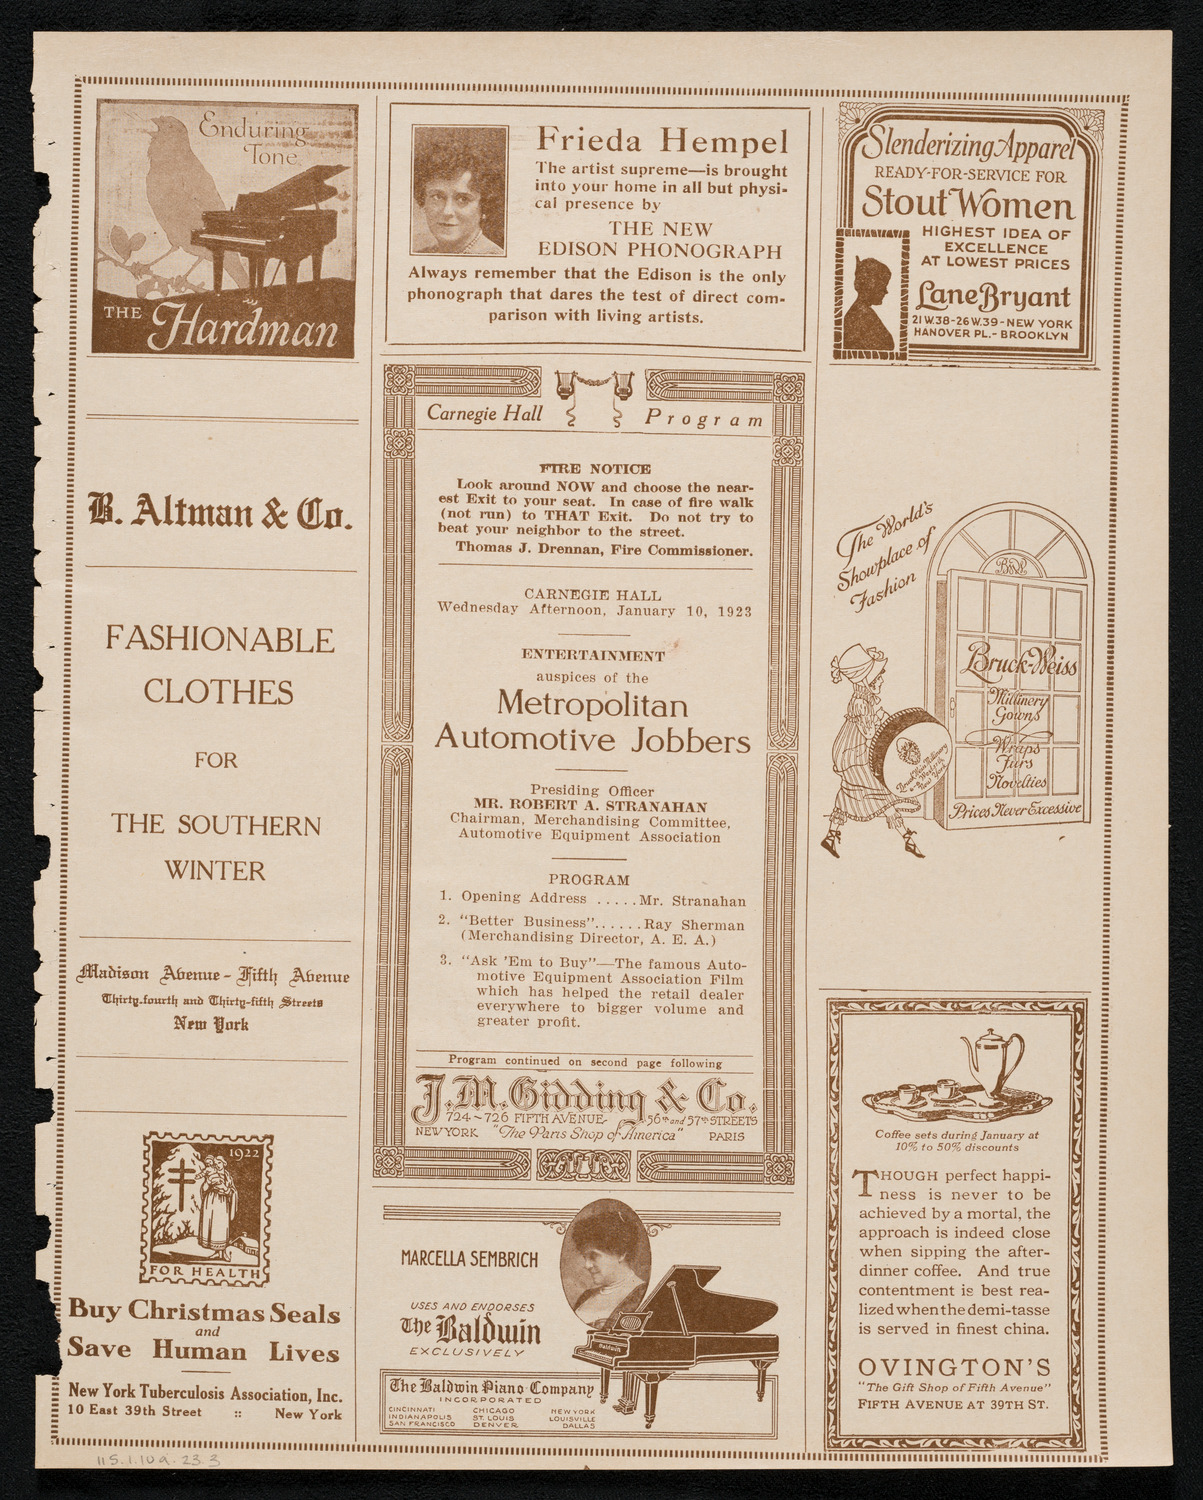 Meeting: Metropolitan Automotive Jobbers, January 10, 1923, program page 5